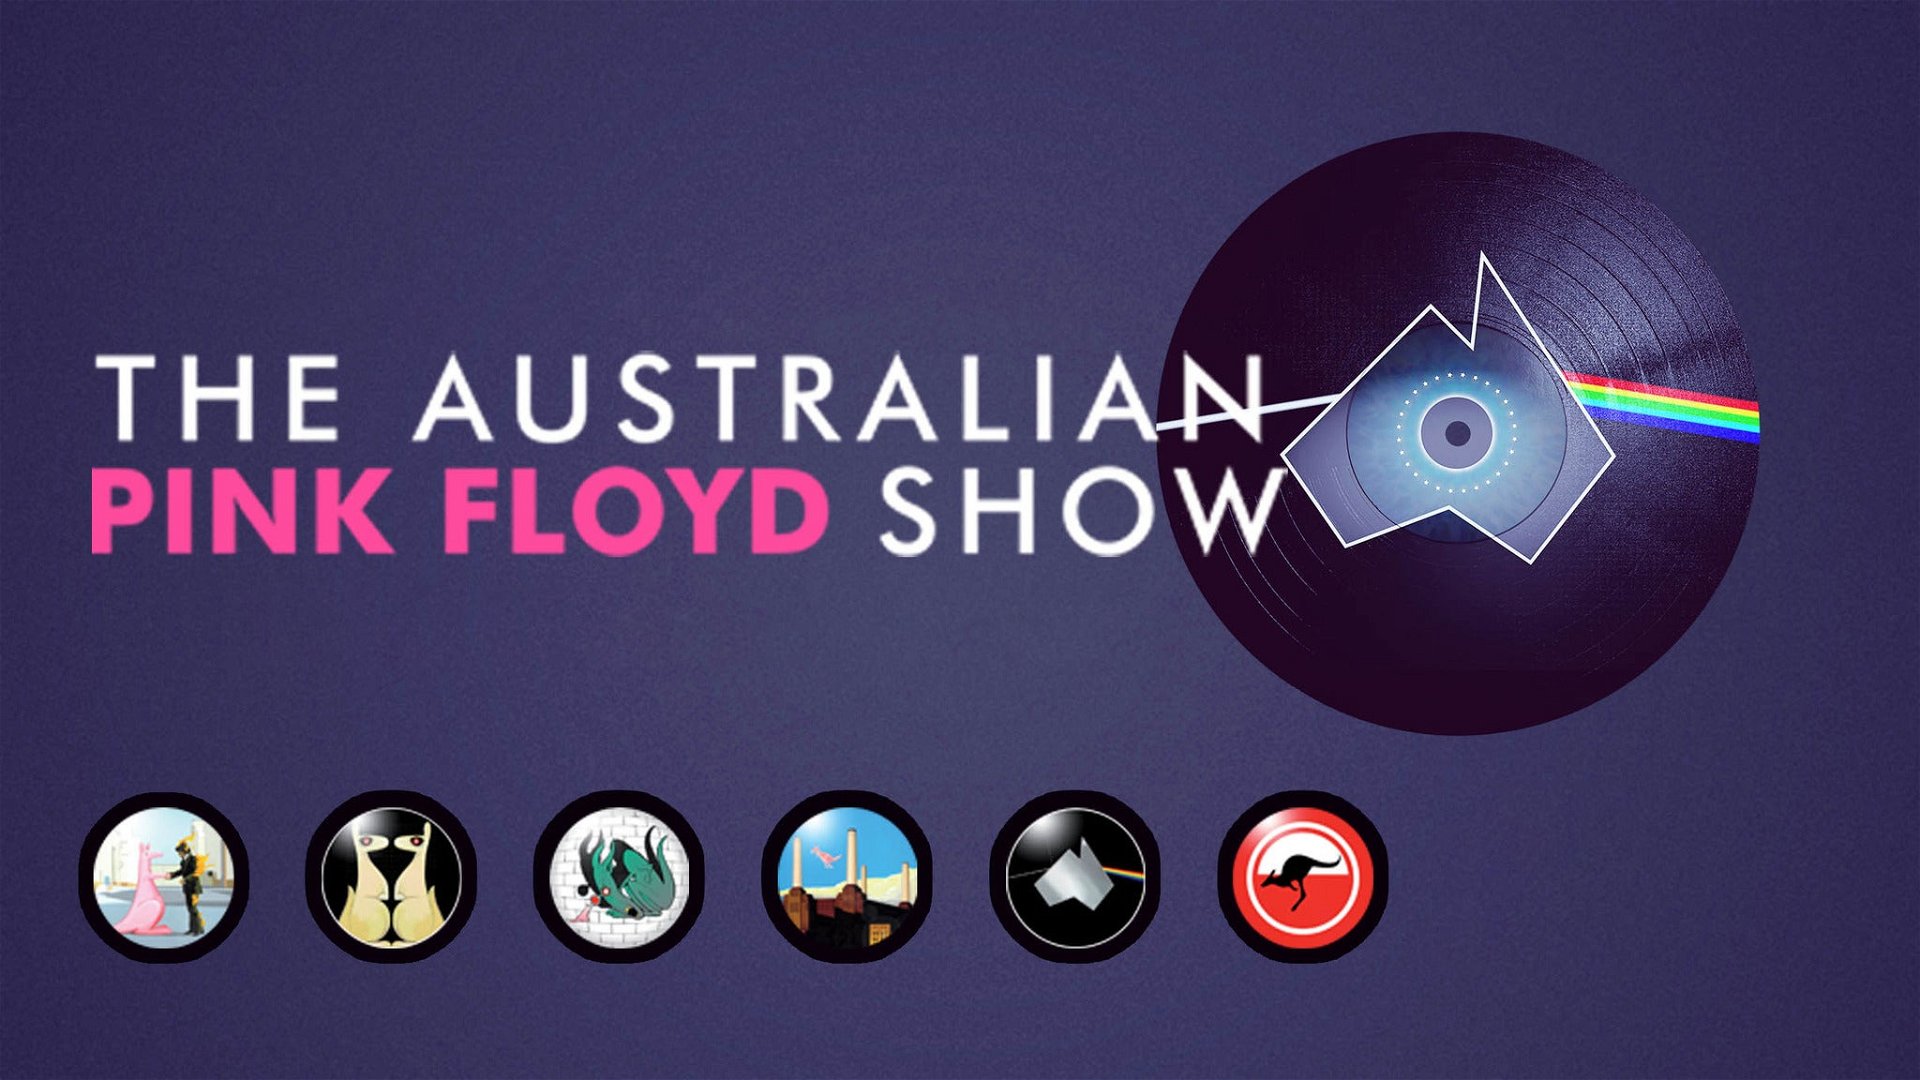 The Australian Pink Floyd Show F64489ed ?class=hr1920